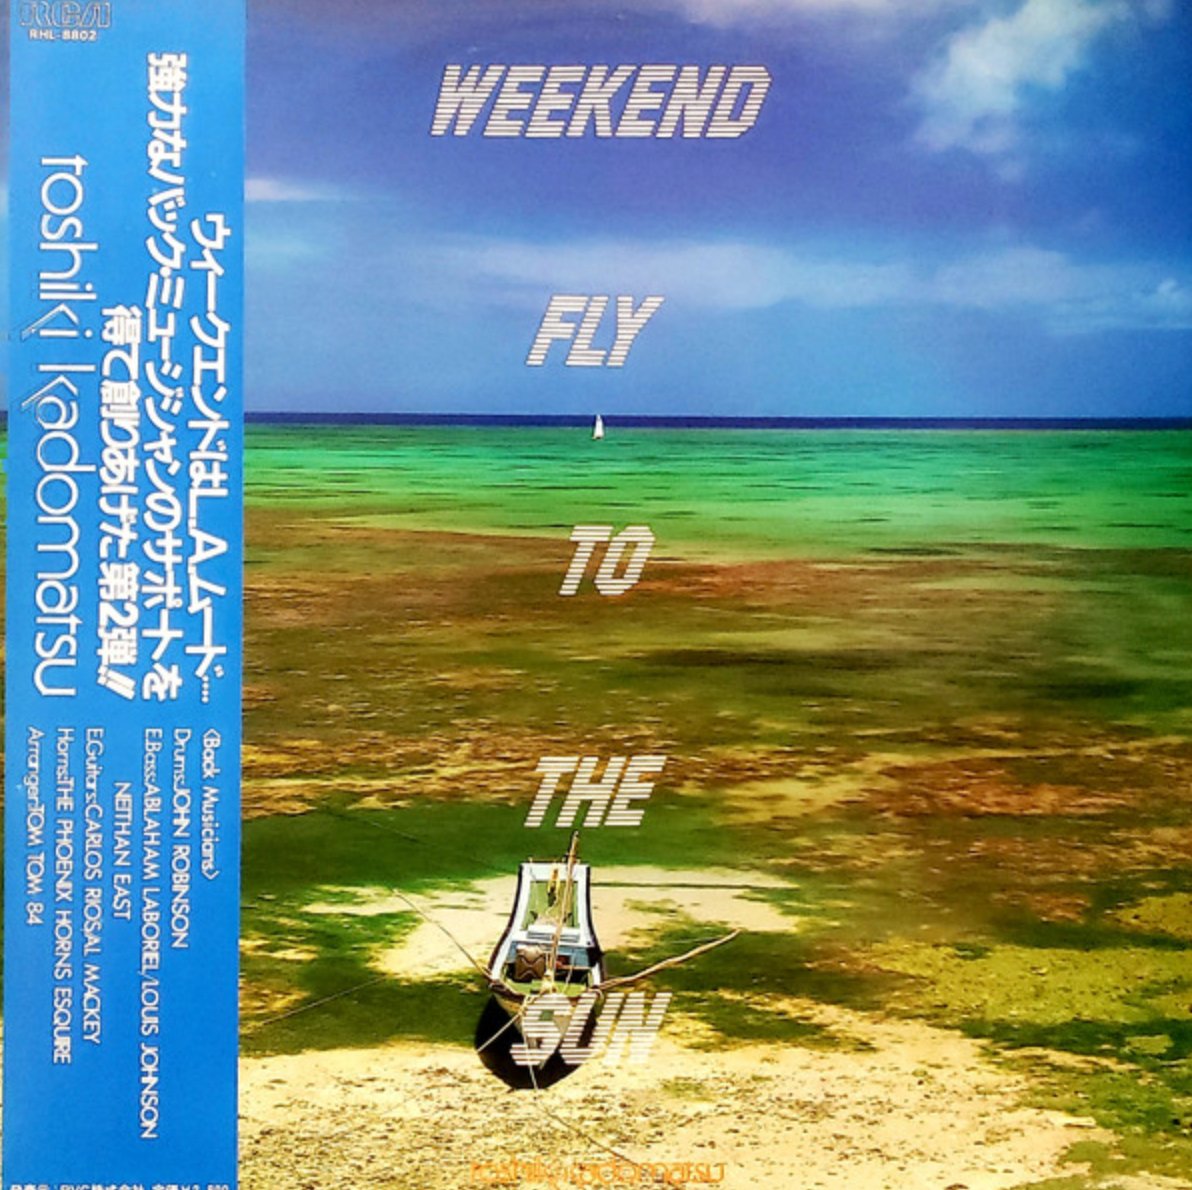 Toshiki Kadomatsu - Weekend Fly To The Sun (Japan Import) - Inner Ocean Records